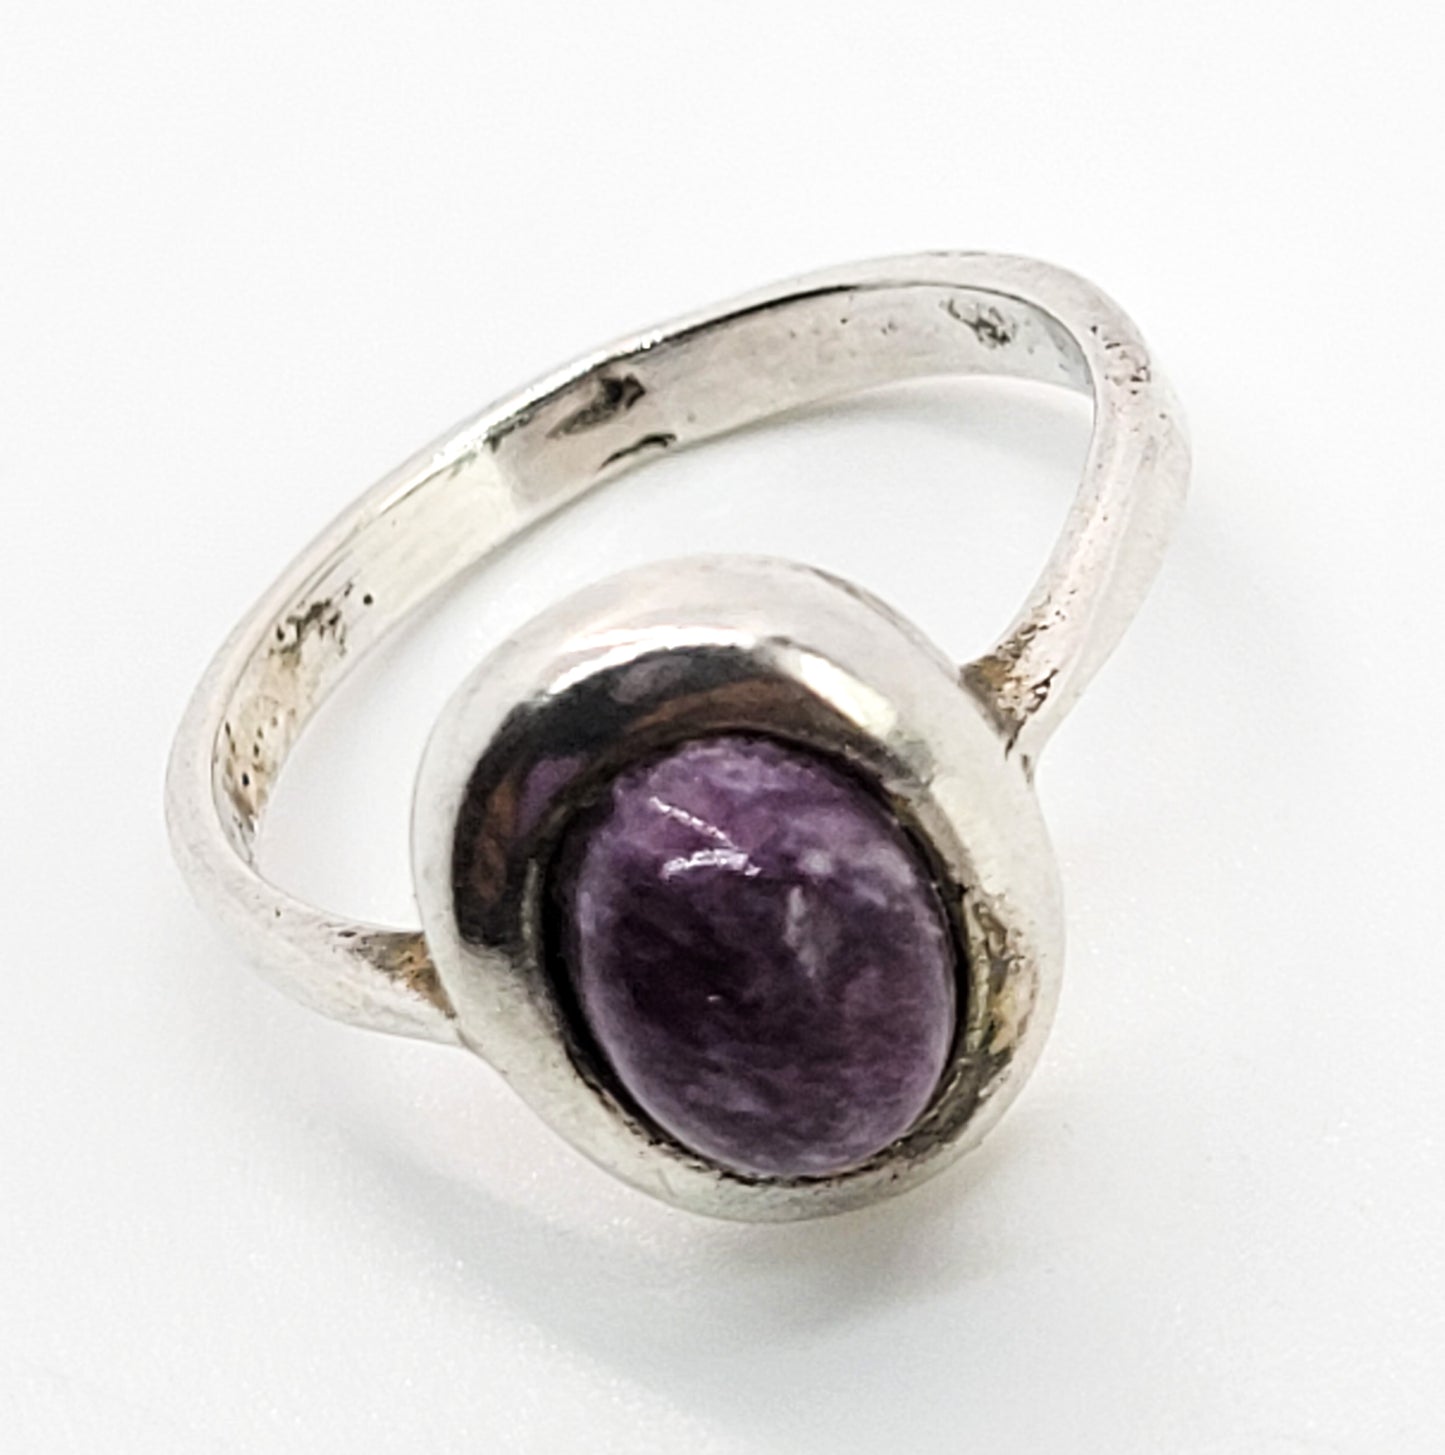 Charoite purple gemstone sterling silver modernist vintage ring size 6.5